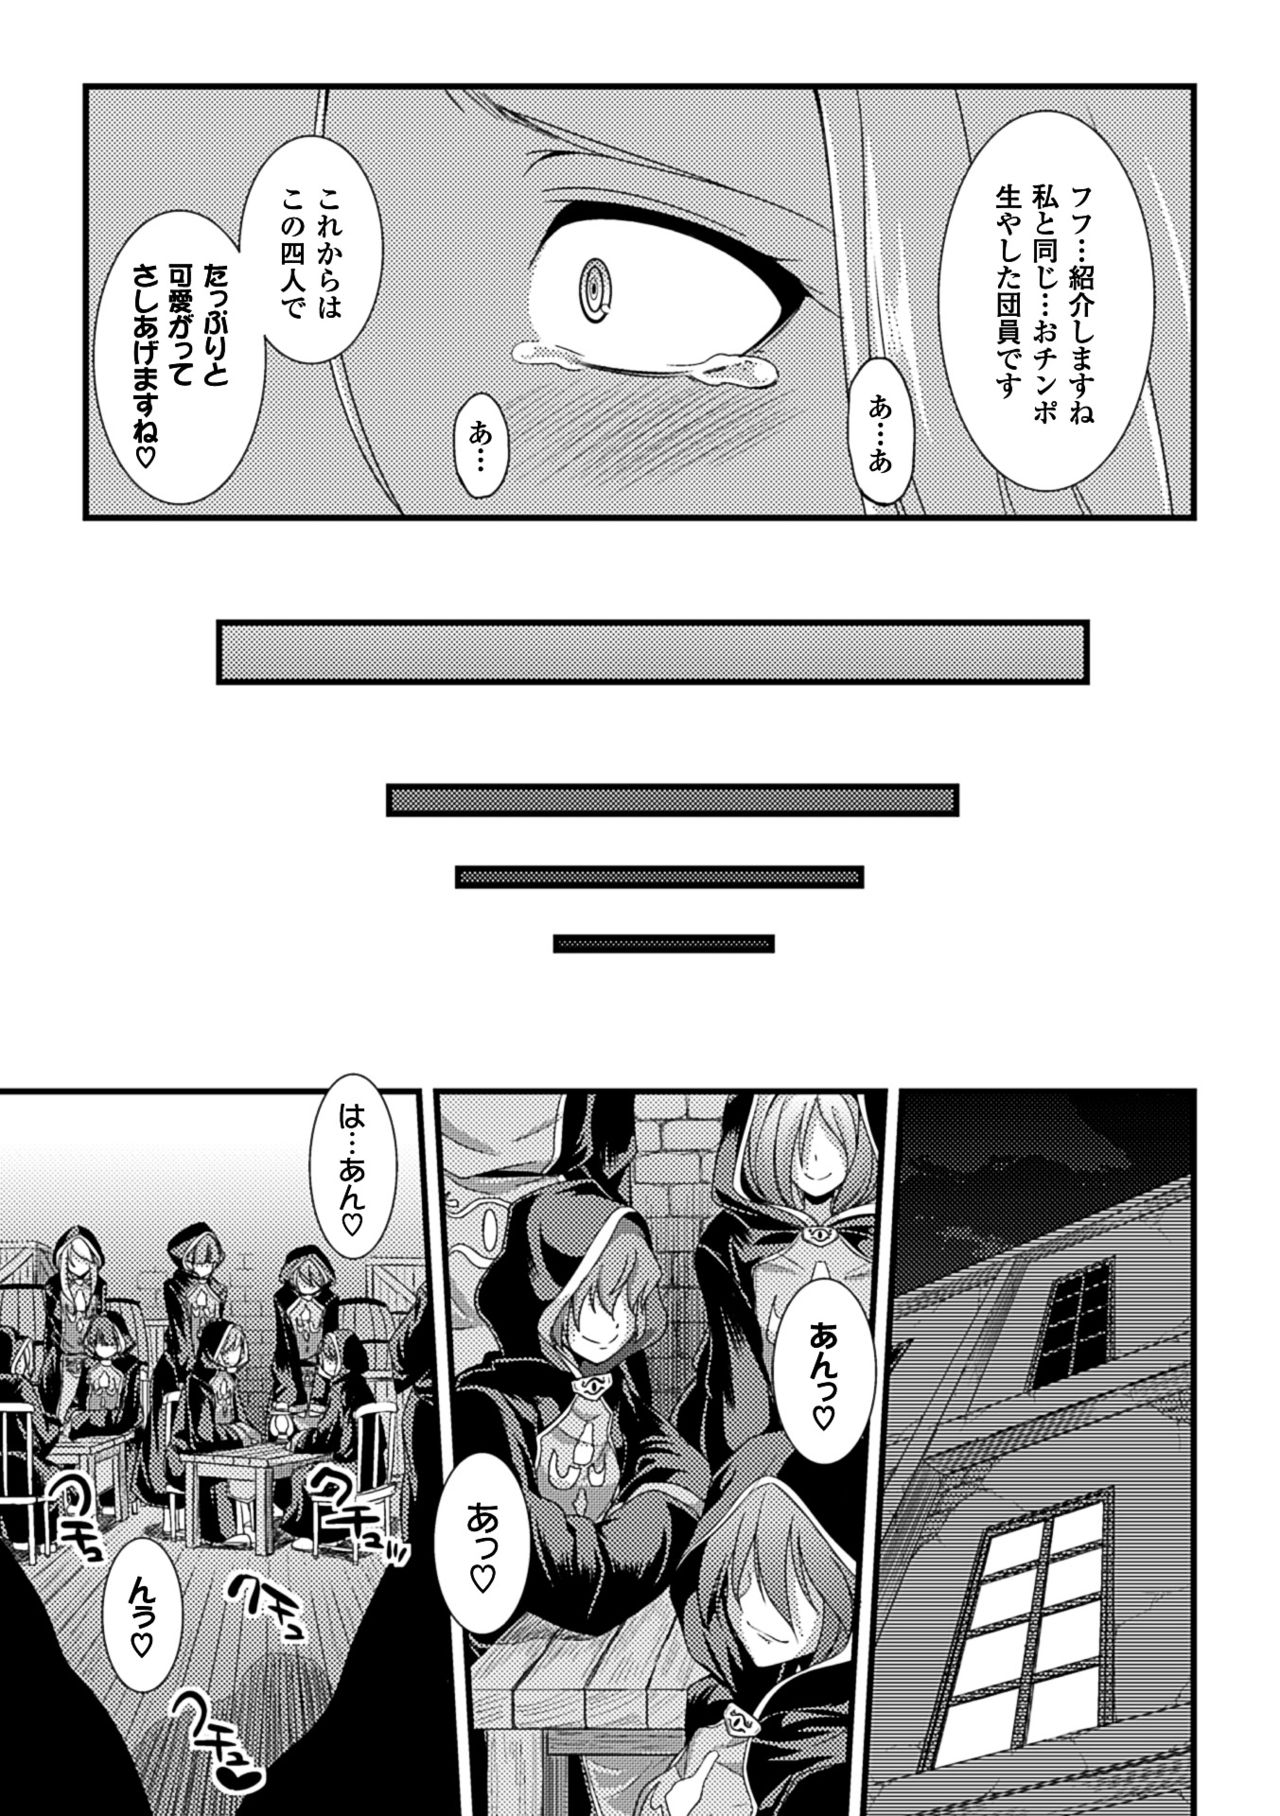 2Dコミックマガジン神外娘原瀬ケダカキメスタチはニンゲンコダネにクップクスるVol。 2